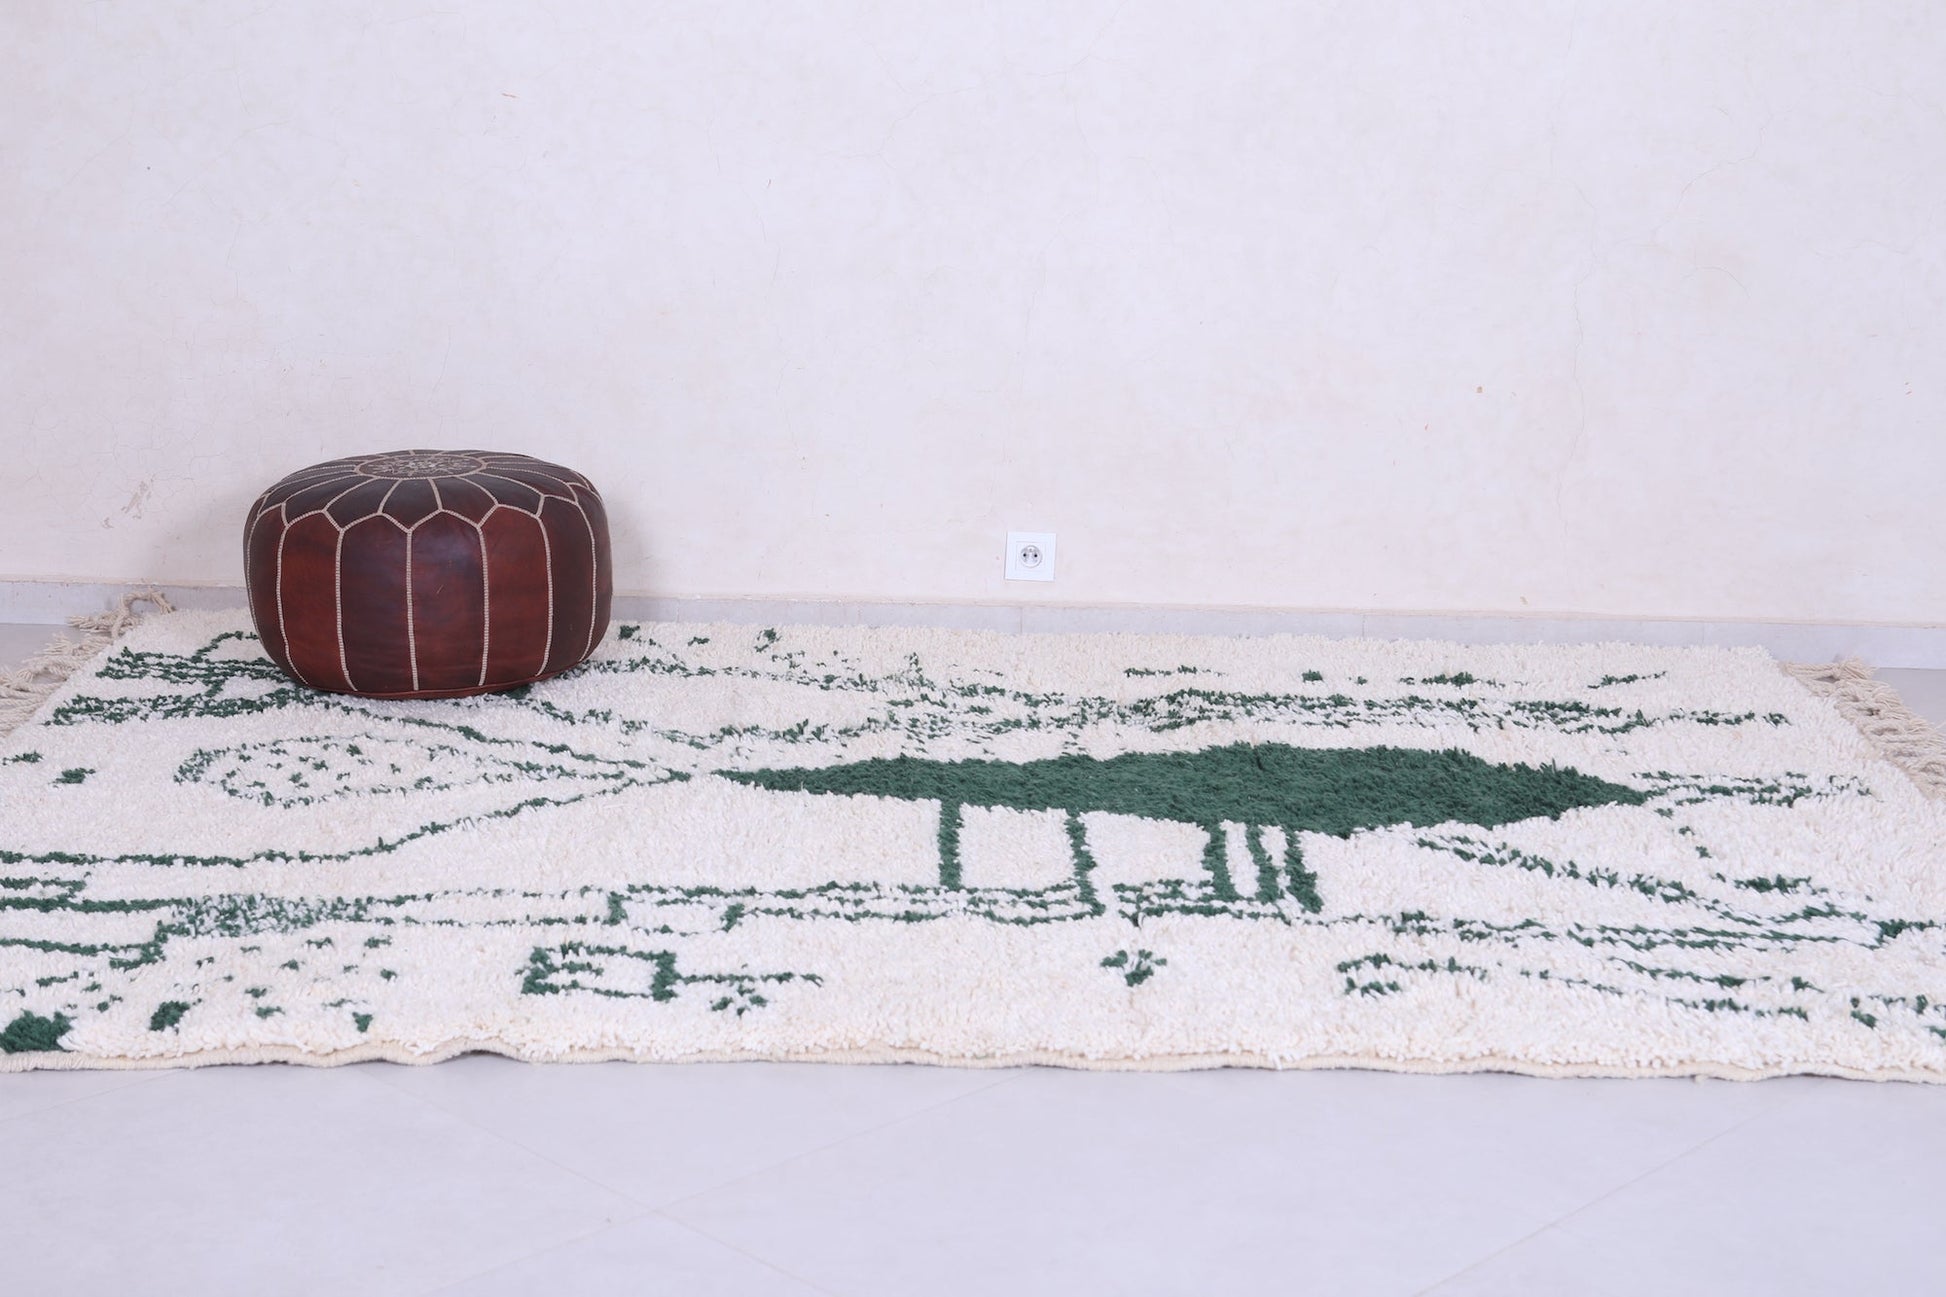 White and green Moroccan carpet - Custom handmade rug